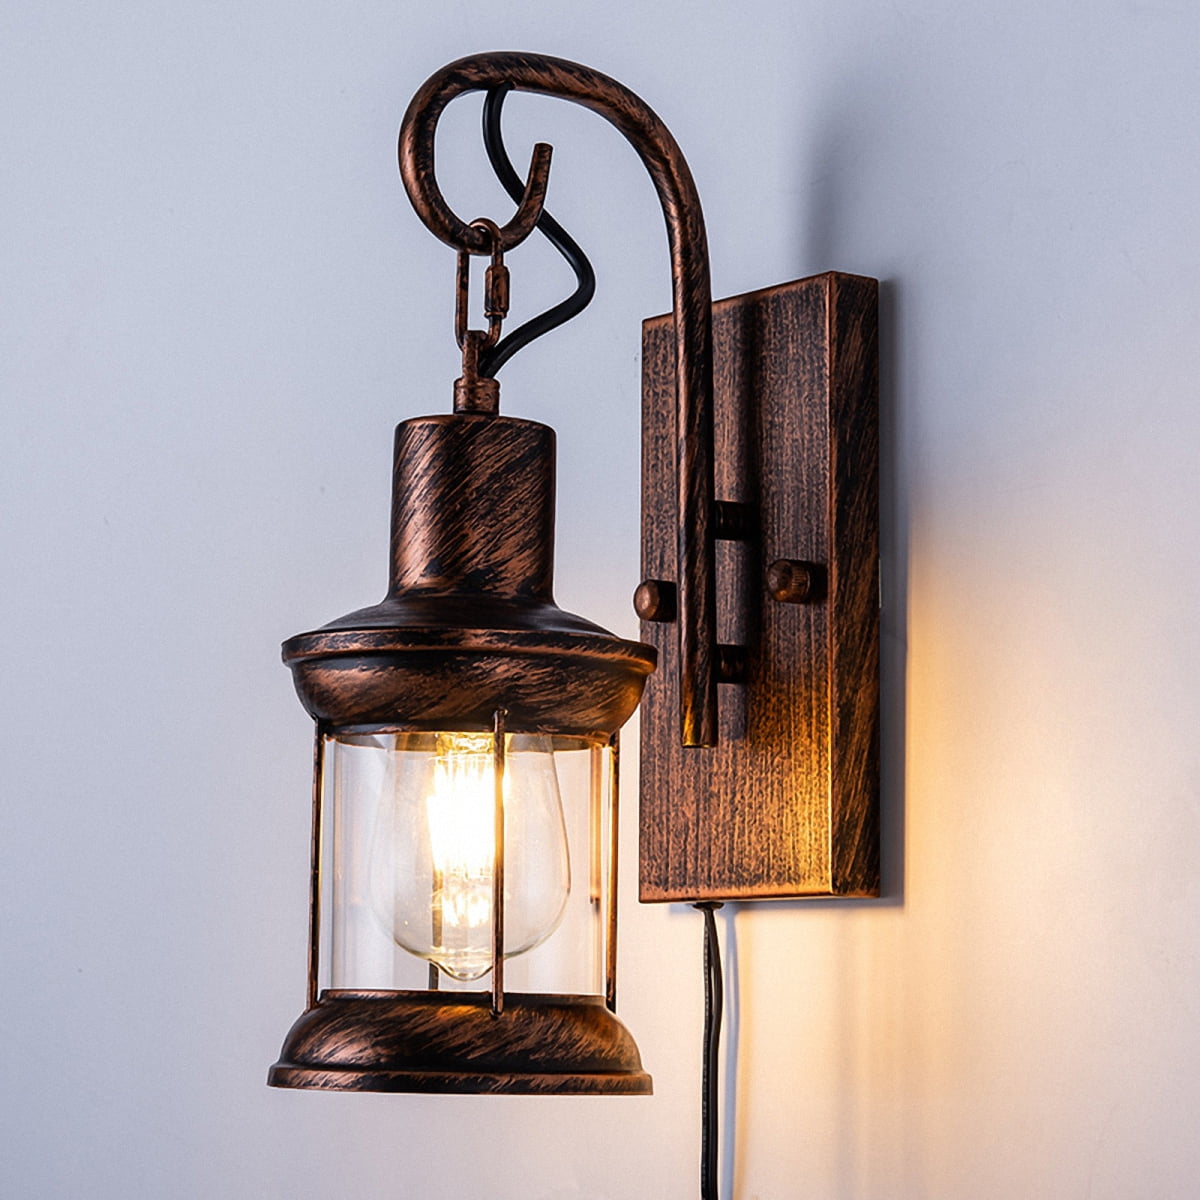 Vintage Industrial Retro Wall Light Rustic Pulley Indoor Sconce Lamp Fixtures 